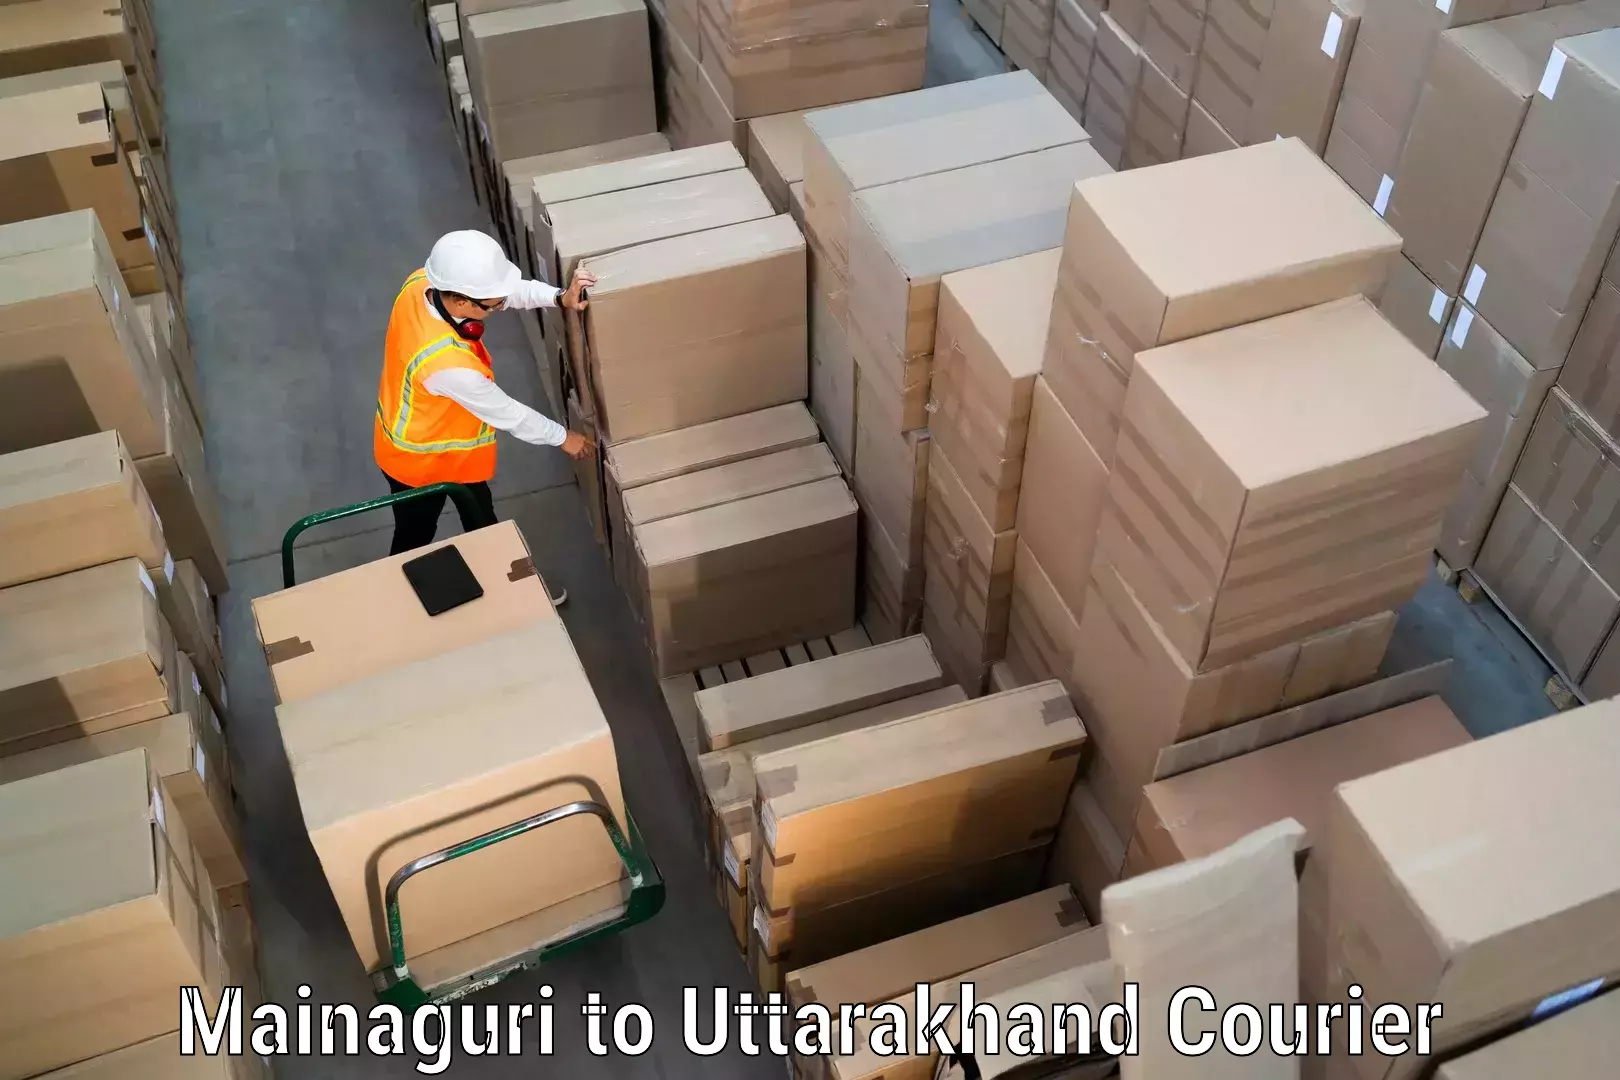 Courier service booking in Mainaguri to Uttarakhand